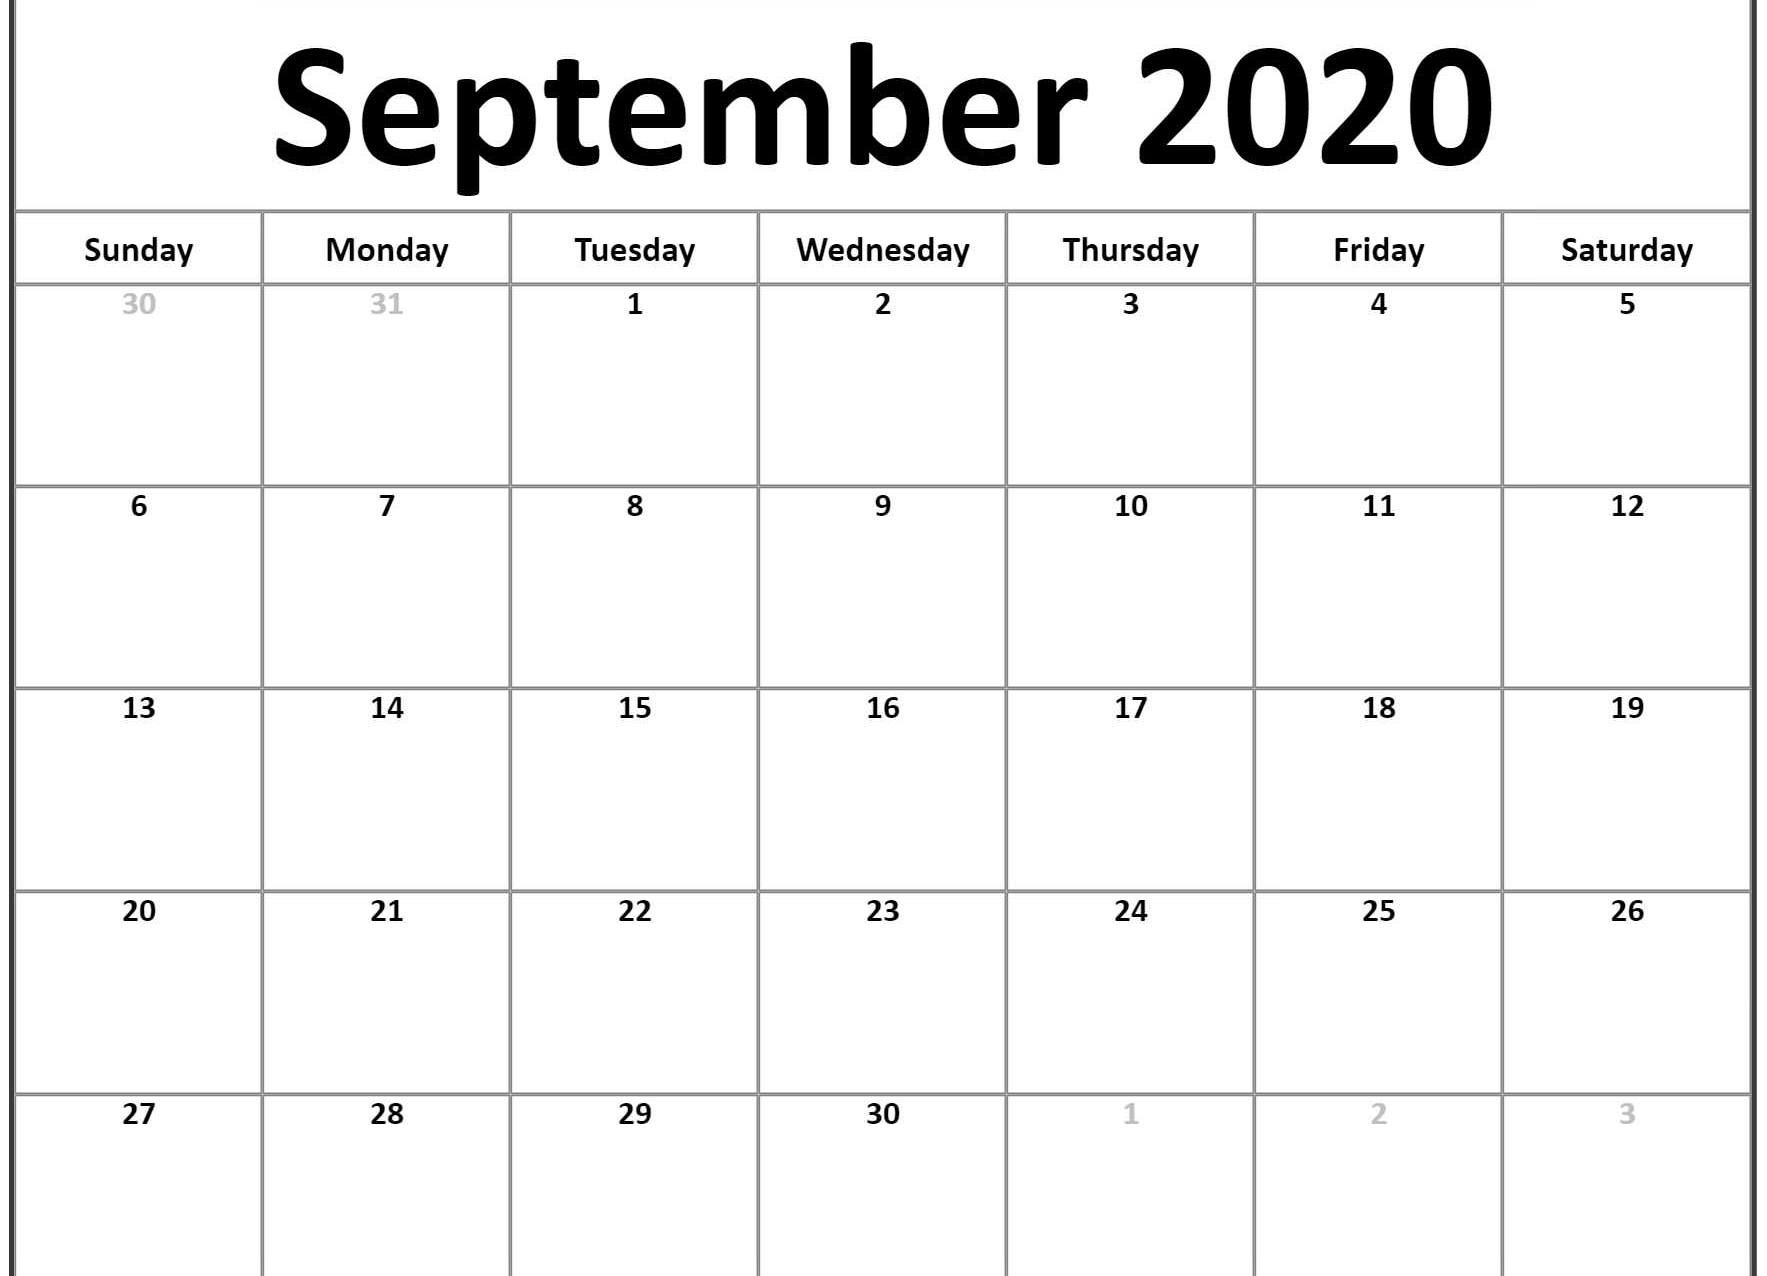 September 2020 Calendar Template | Printable Calendar